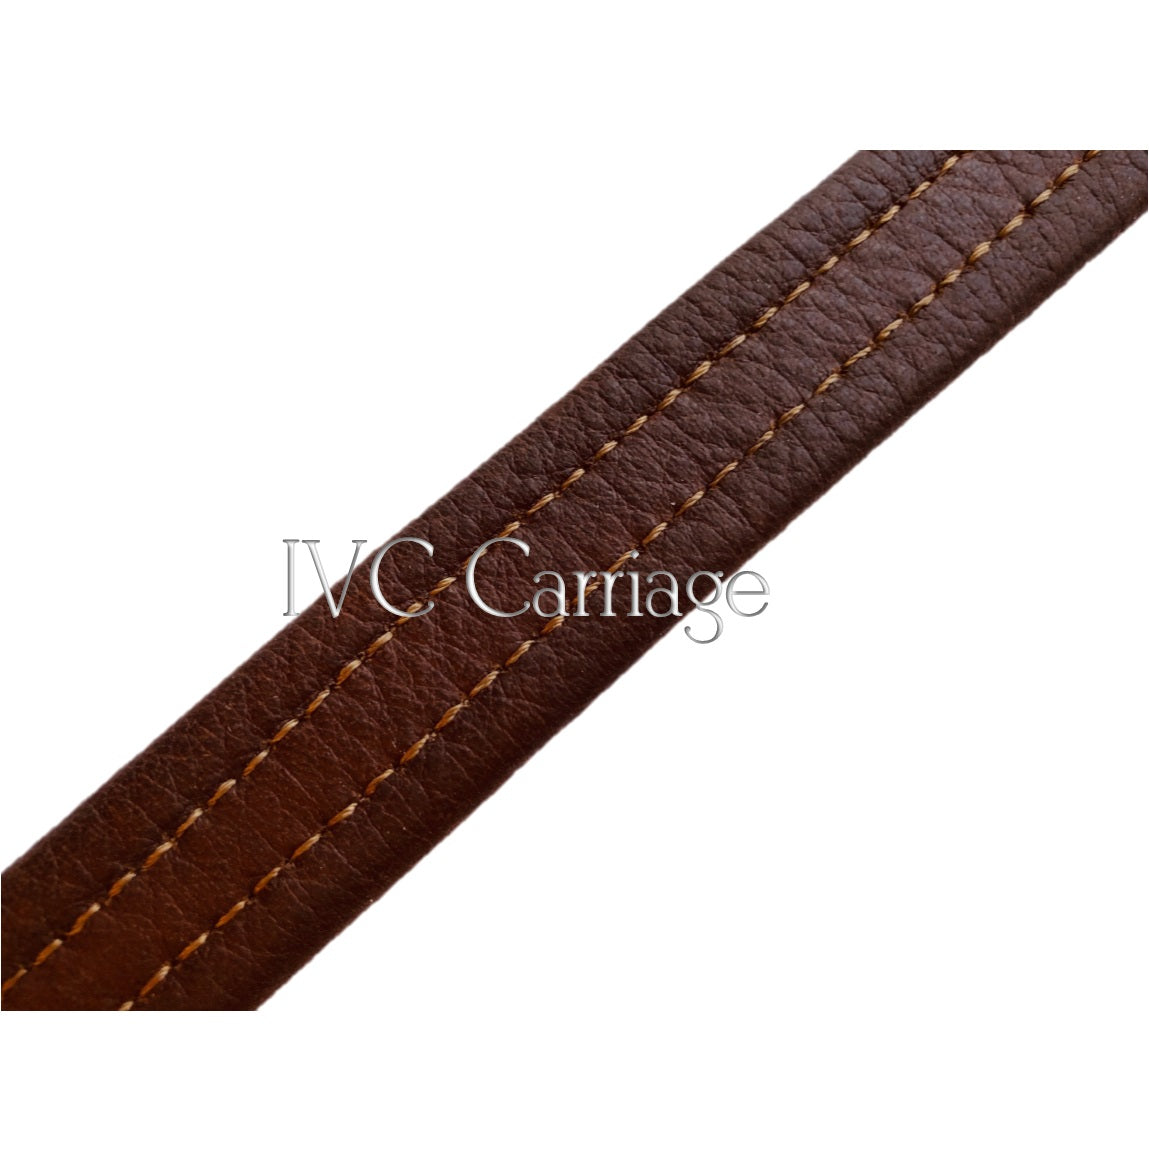 Bowman Garment Leather Reins | IVC Carriage